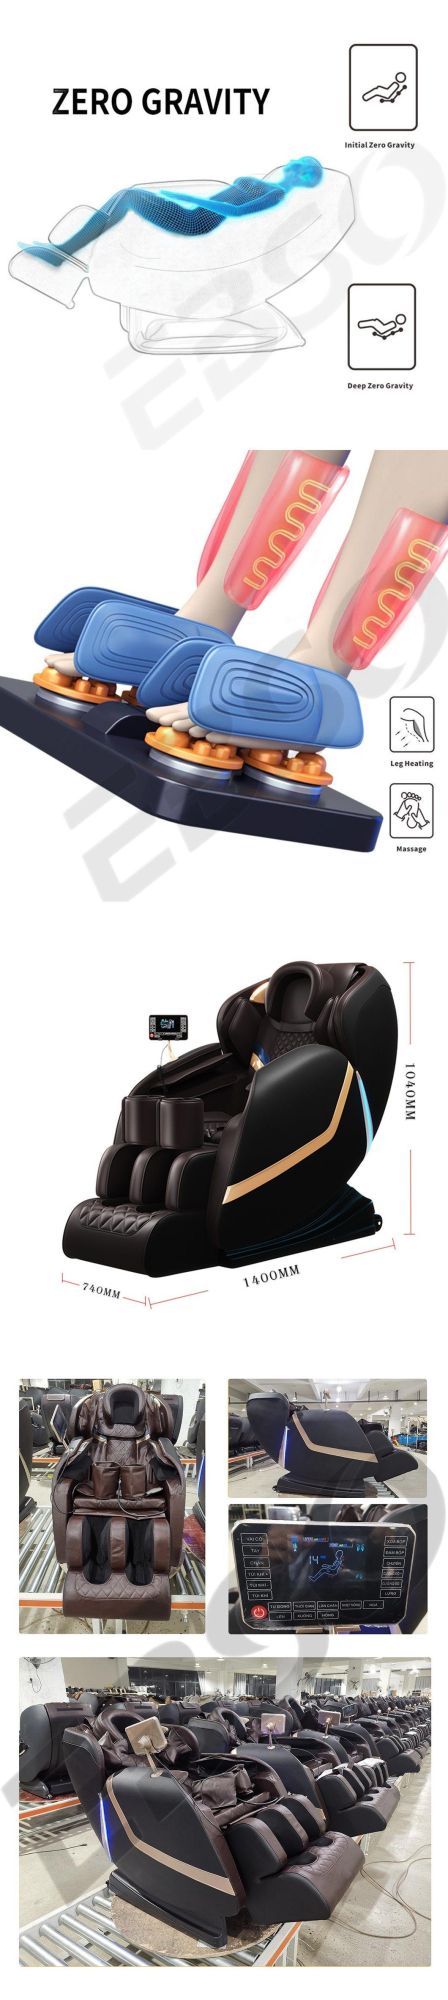 Electric Massage Chair Full Body Zero Gravity Shiatsu Massage Chair